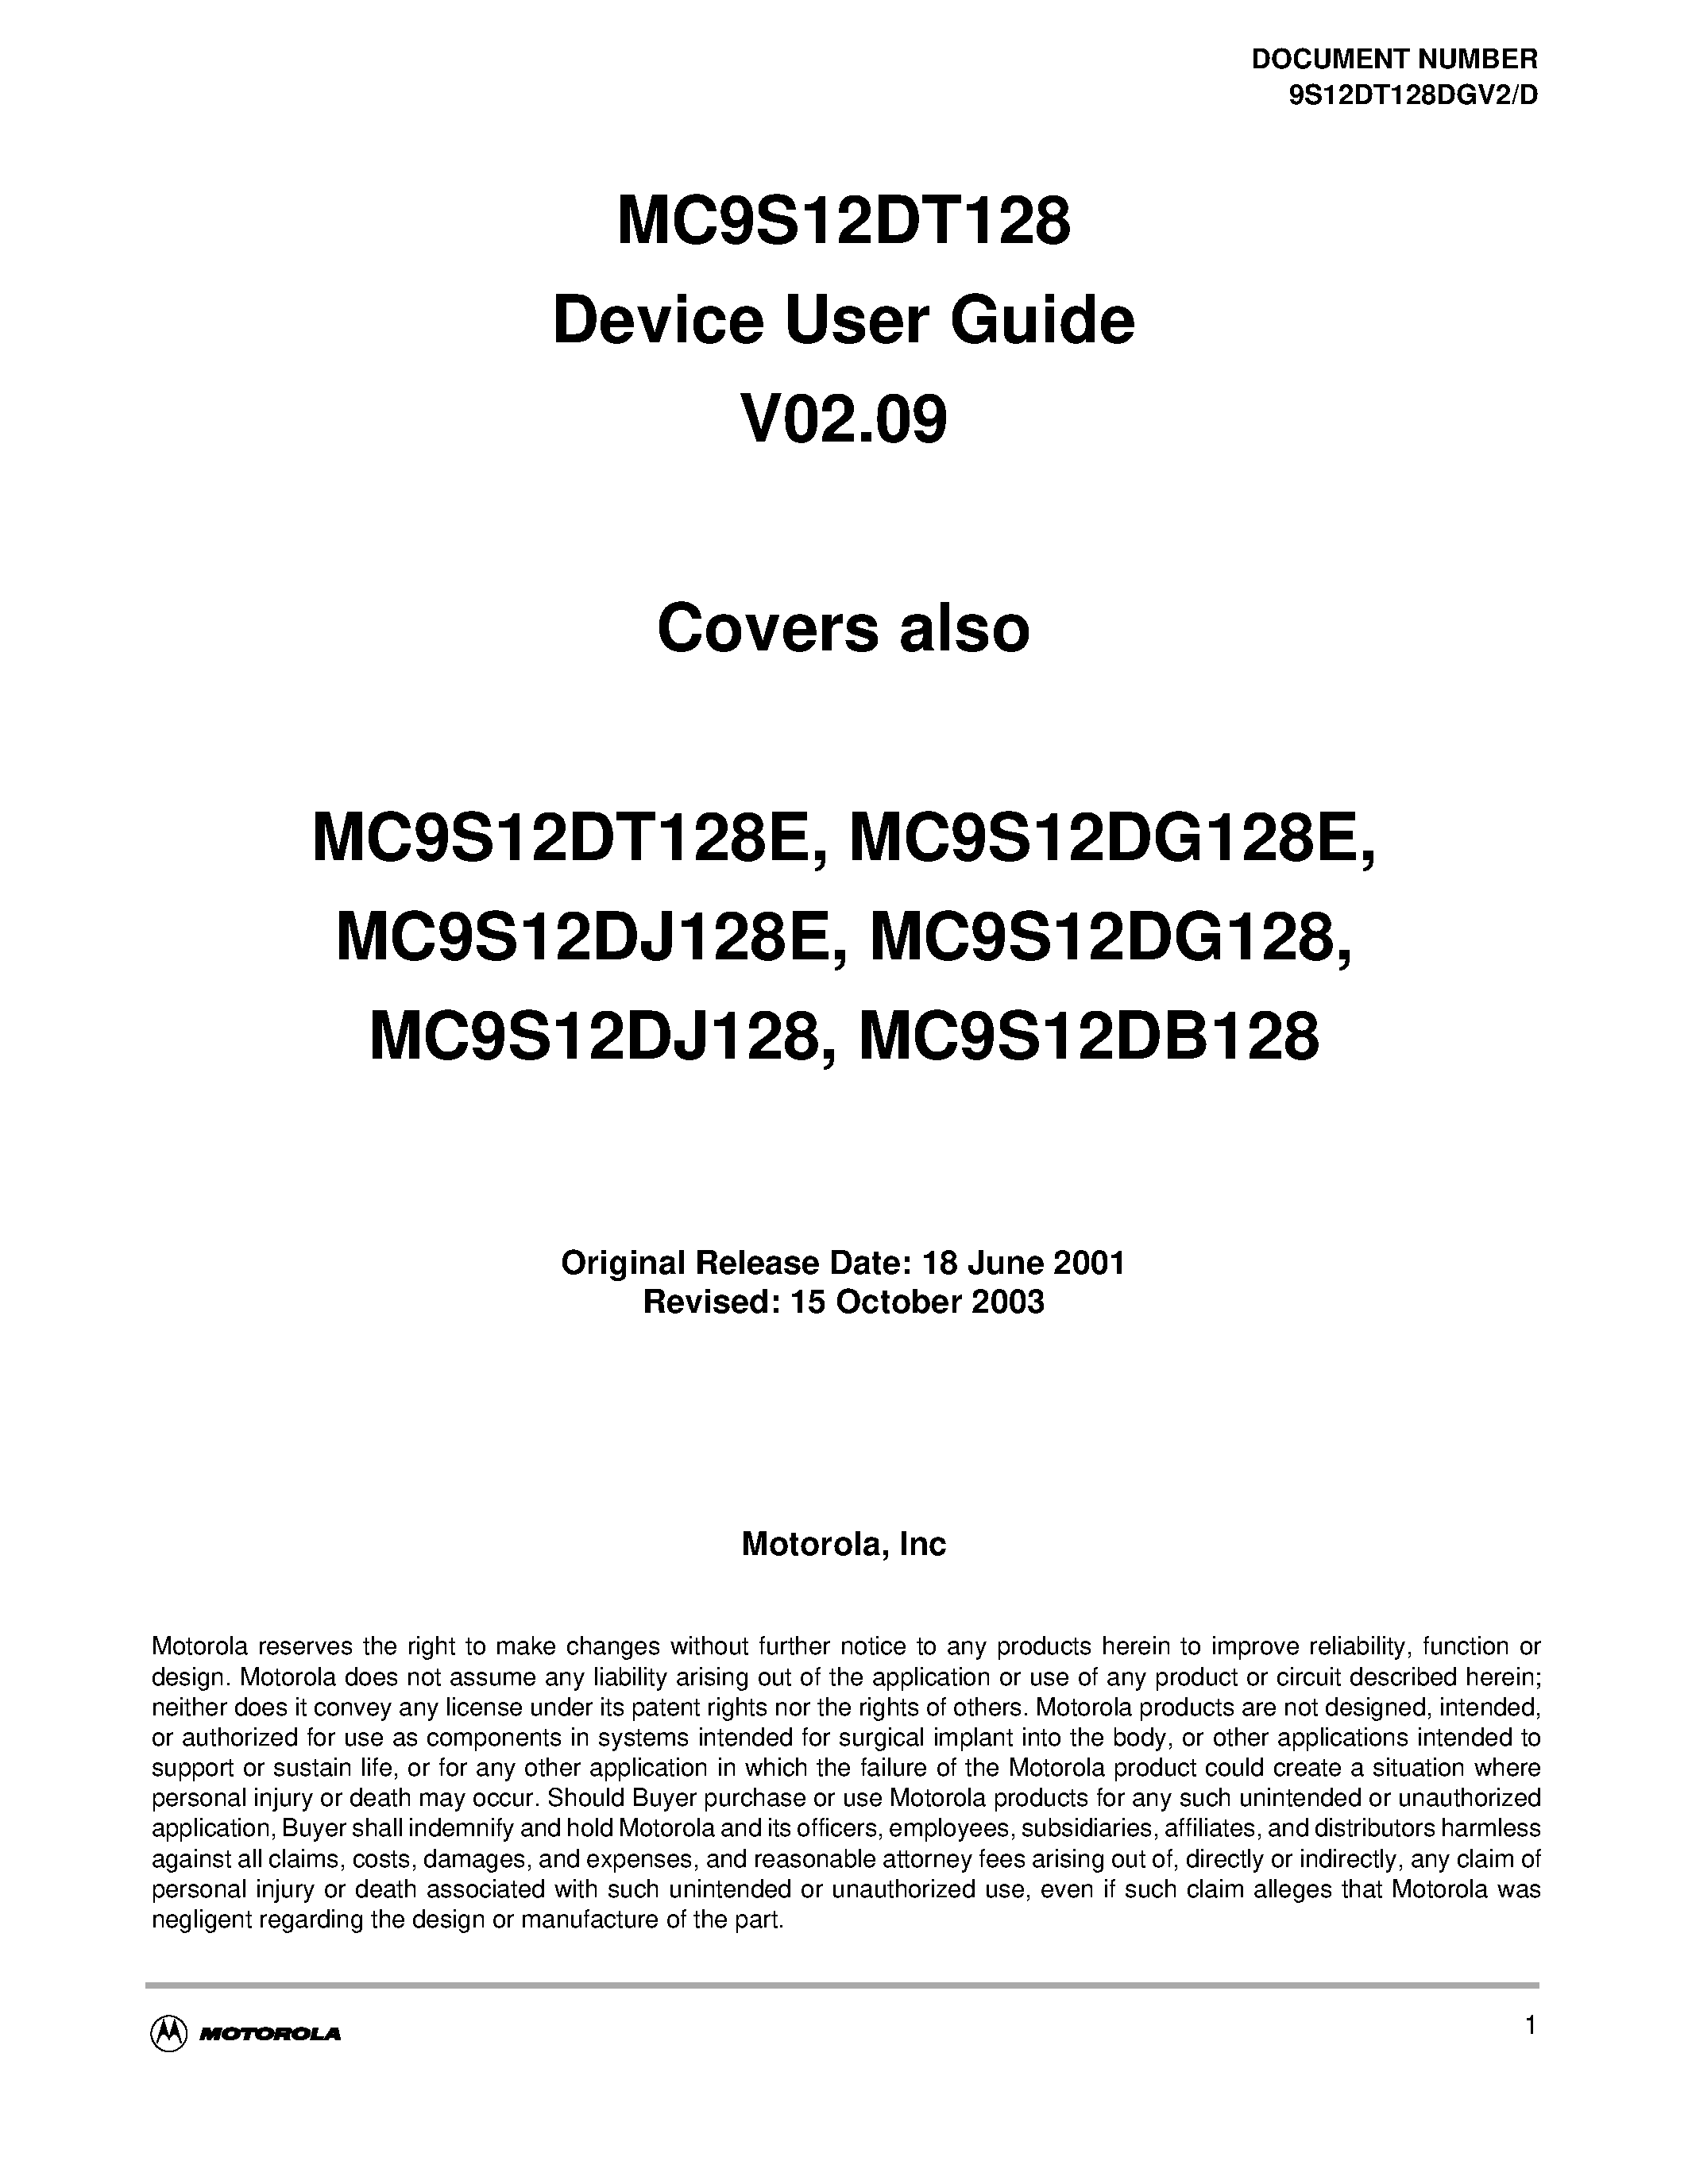 Даташит S12MMCV4D - MC9S12DT128 Device User Guide V02.09 страница 1